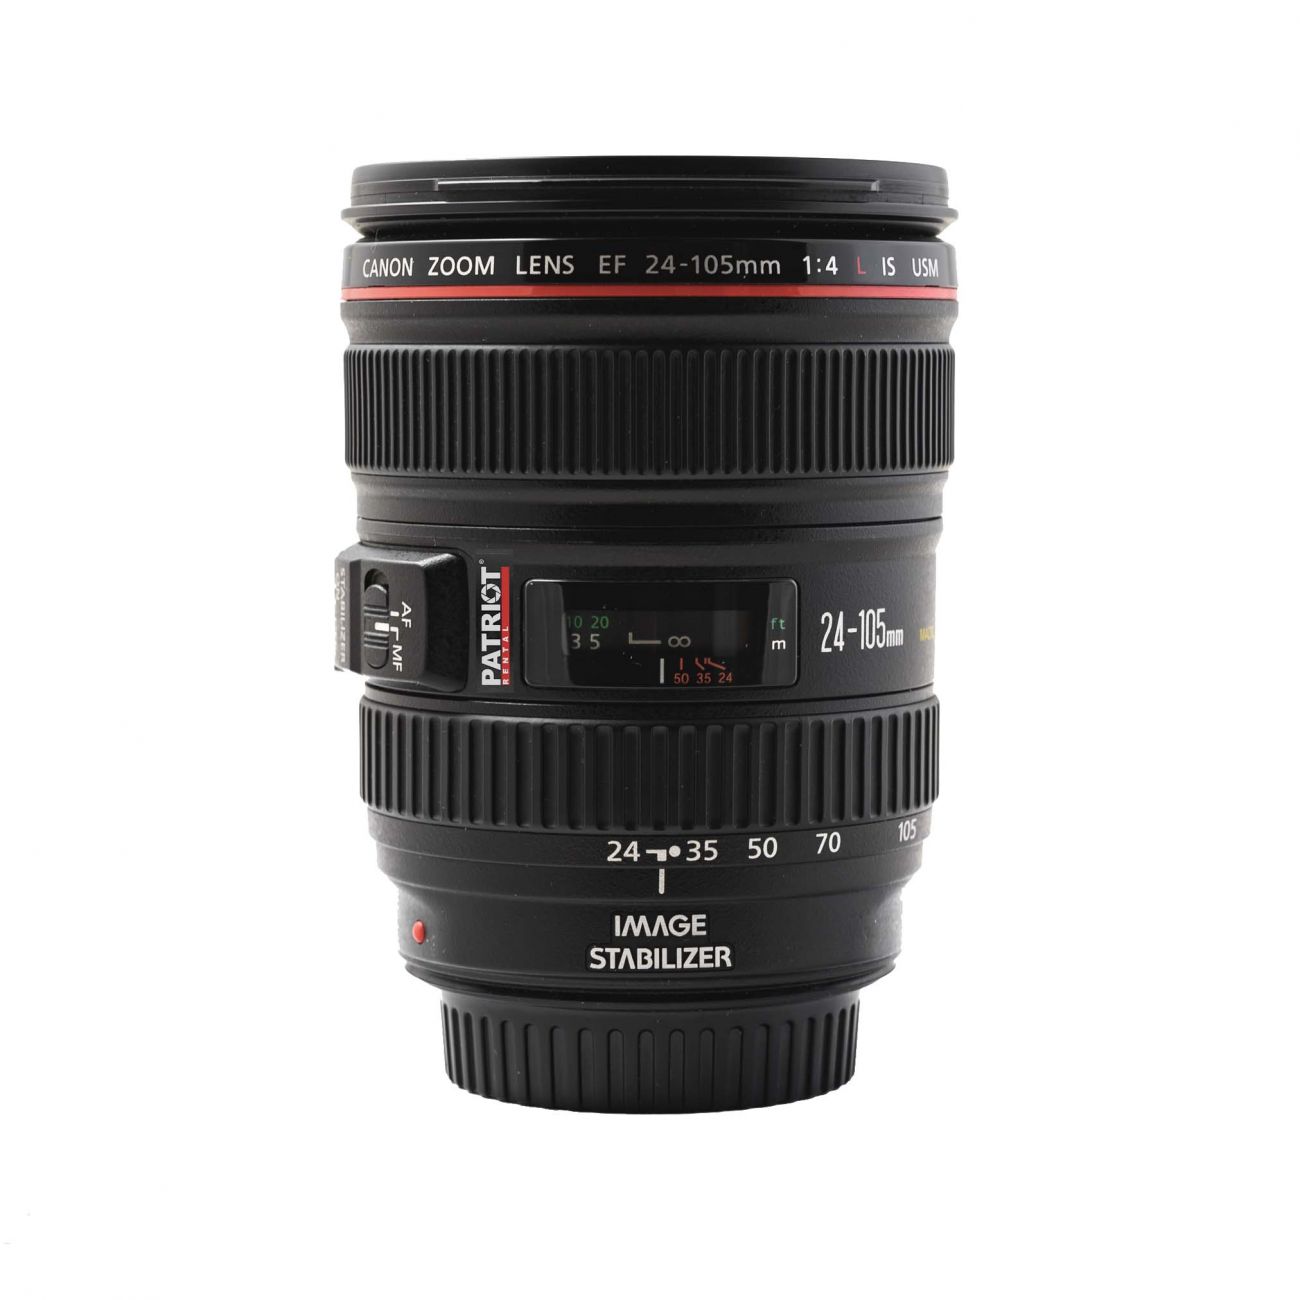 24-105mm Canon zoom lens f/4 L IS USM Lens